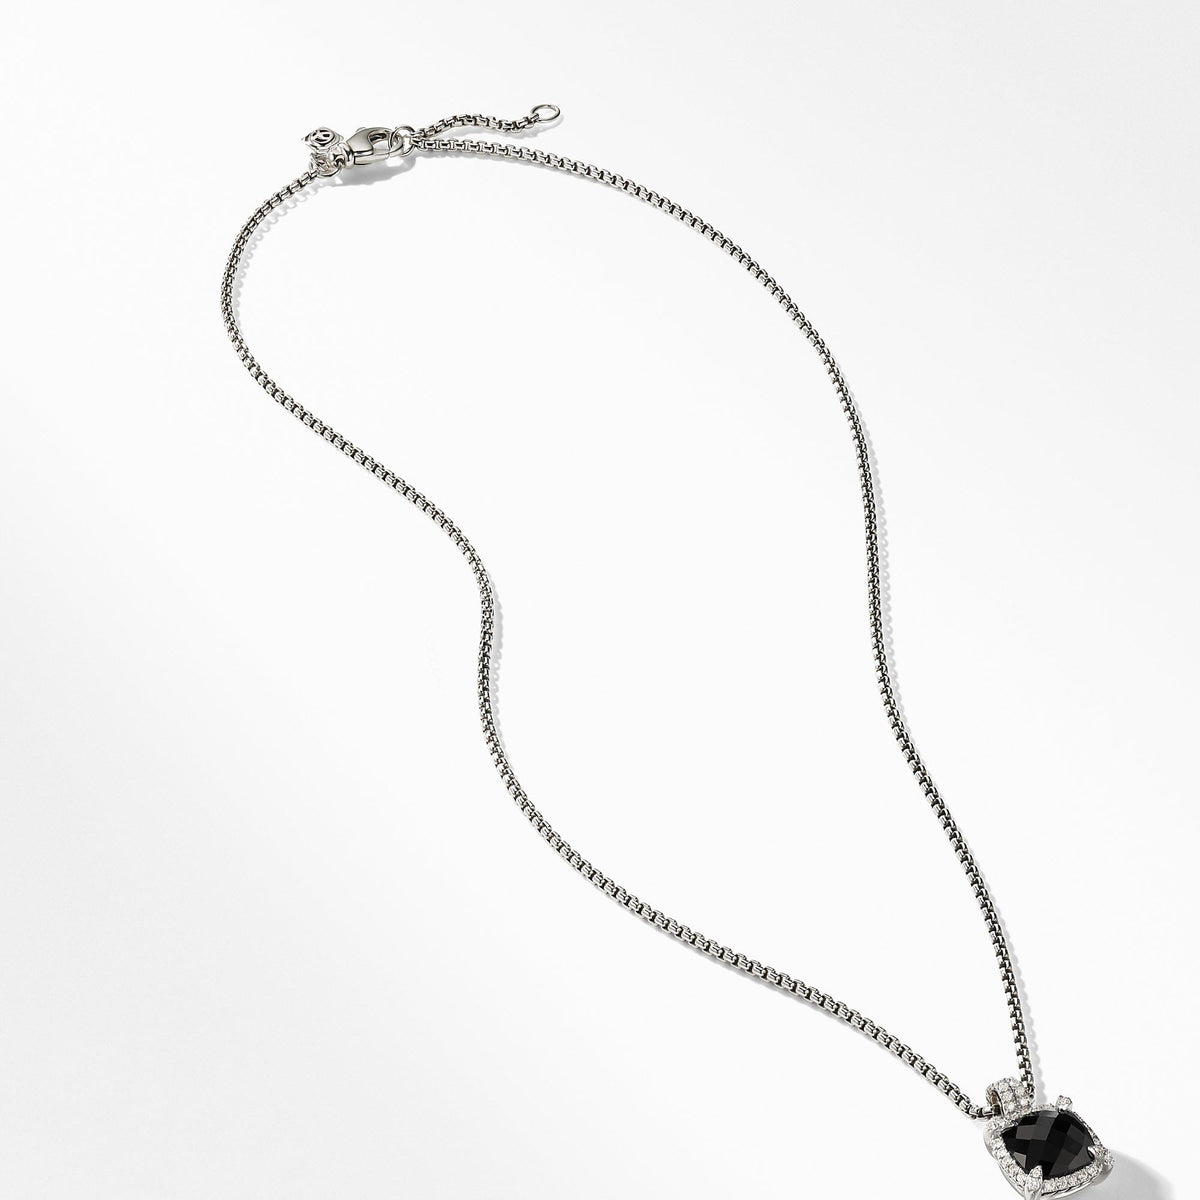 Chatelaine Pave Bezel Pendant Necklace with Black Onyx and Diamonds, 9mm